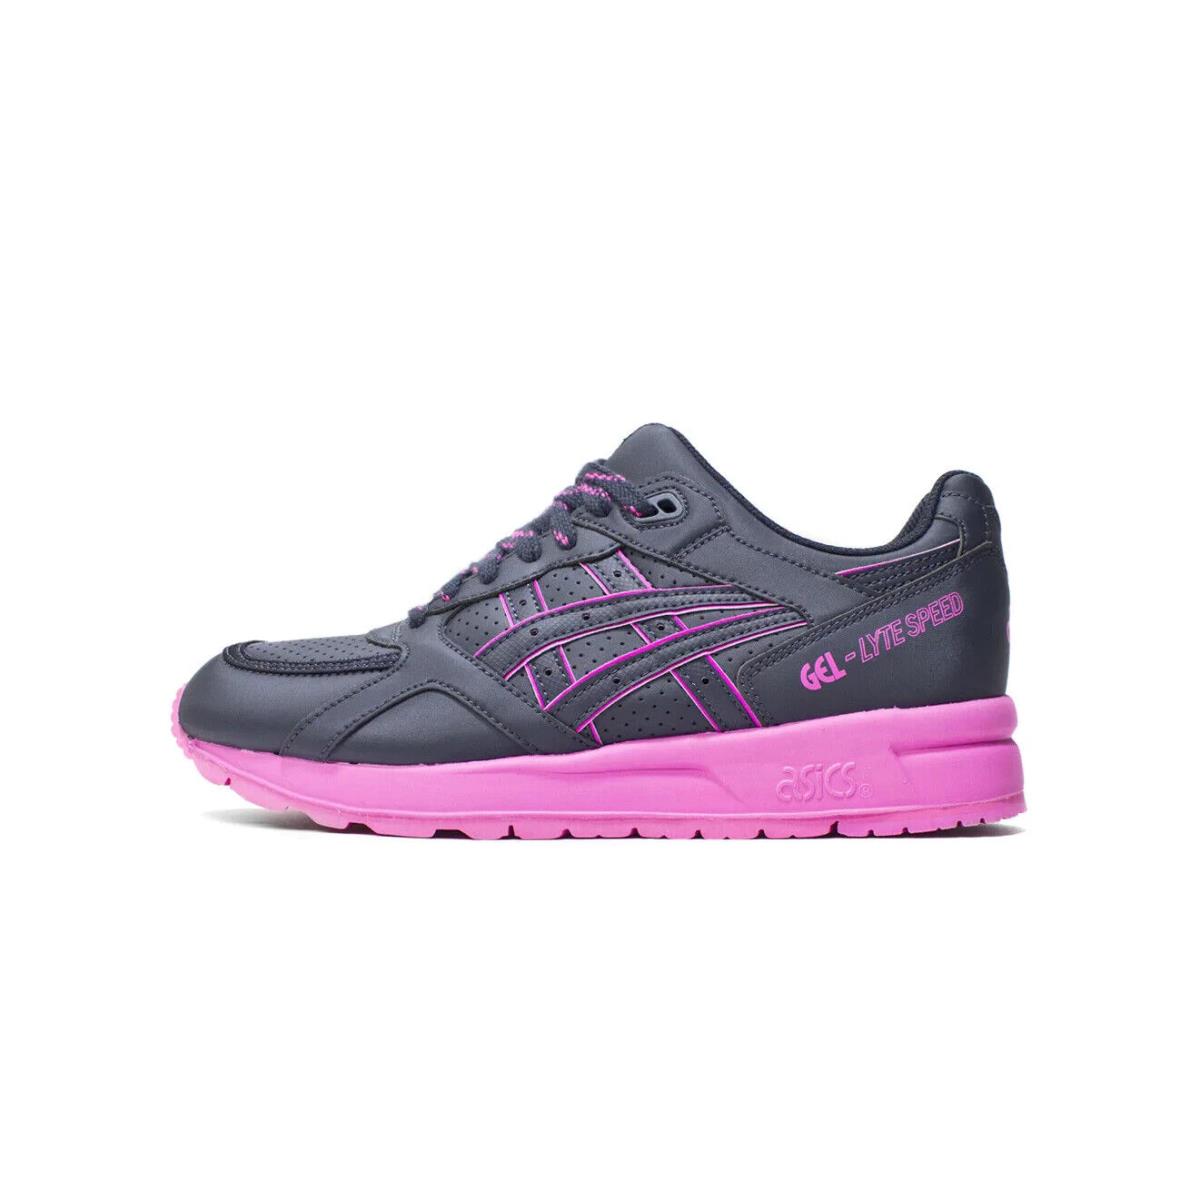 Asics Gel-lyte Speed H616y-5050 Men`s Indian Ink/pink Running Shoes Size 5 PB650